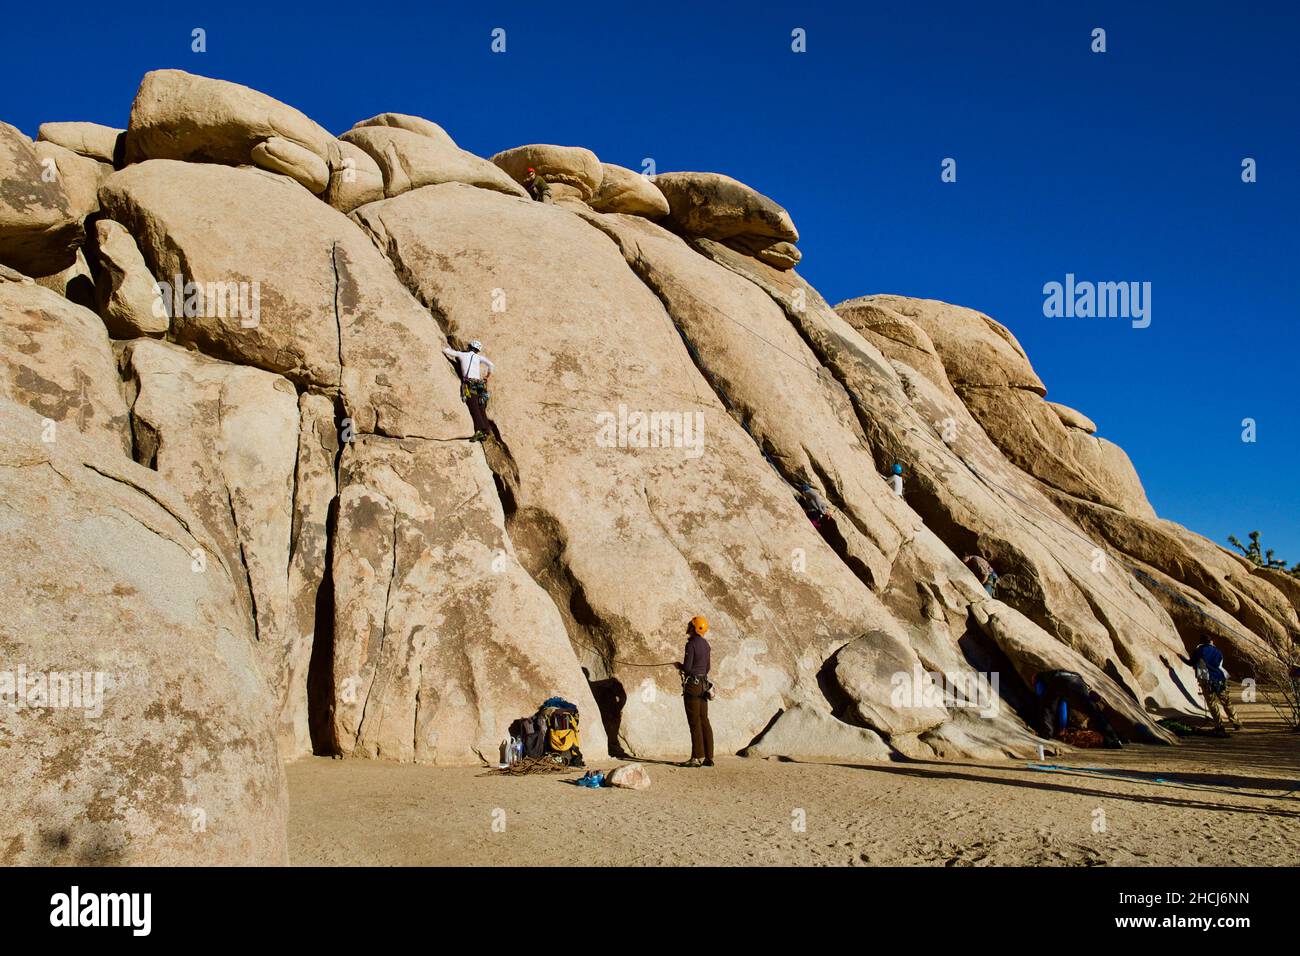 Rock climbers climbing a rock face at Joshua Tree National Park, home of Yucca brevifolia or Joshua trees, California, USA. Stock Photo